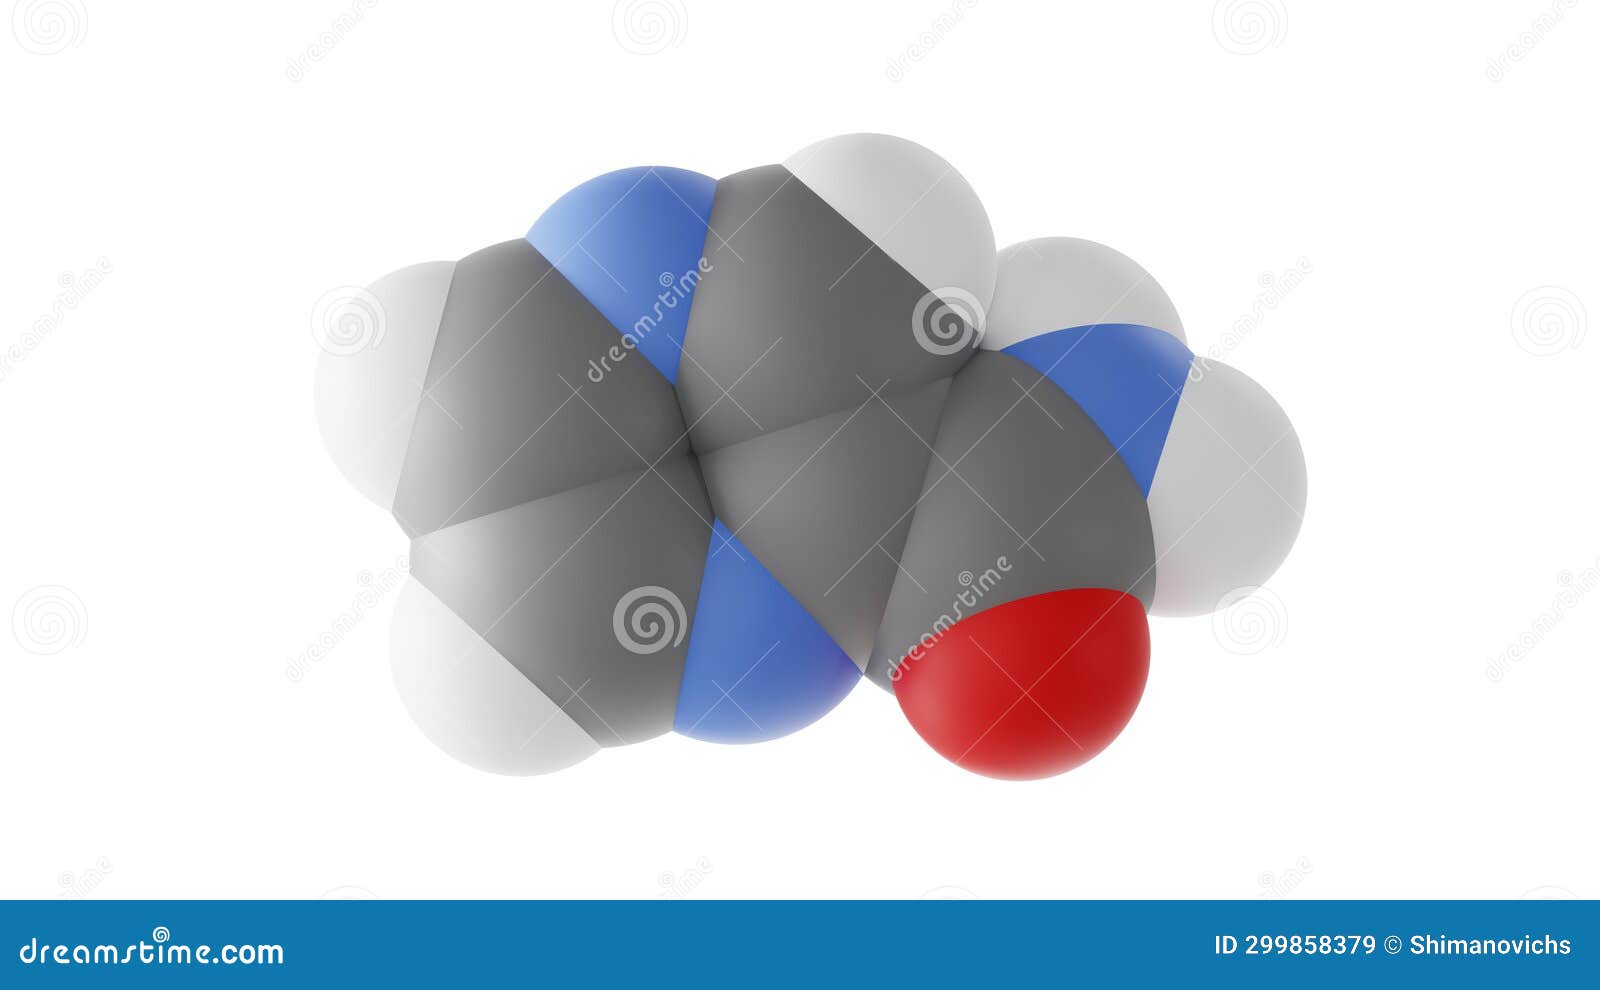 pyrazinamide molecule, antituberculosis agents, molecular structure,  3d model van der waals